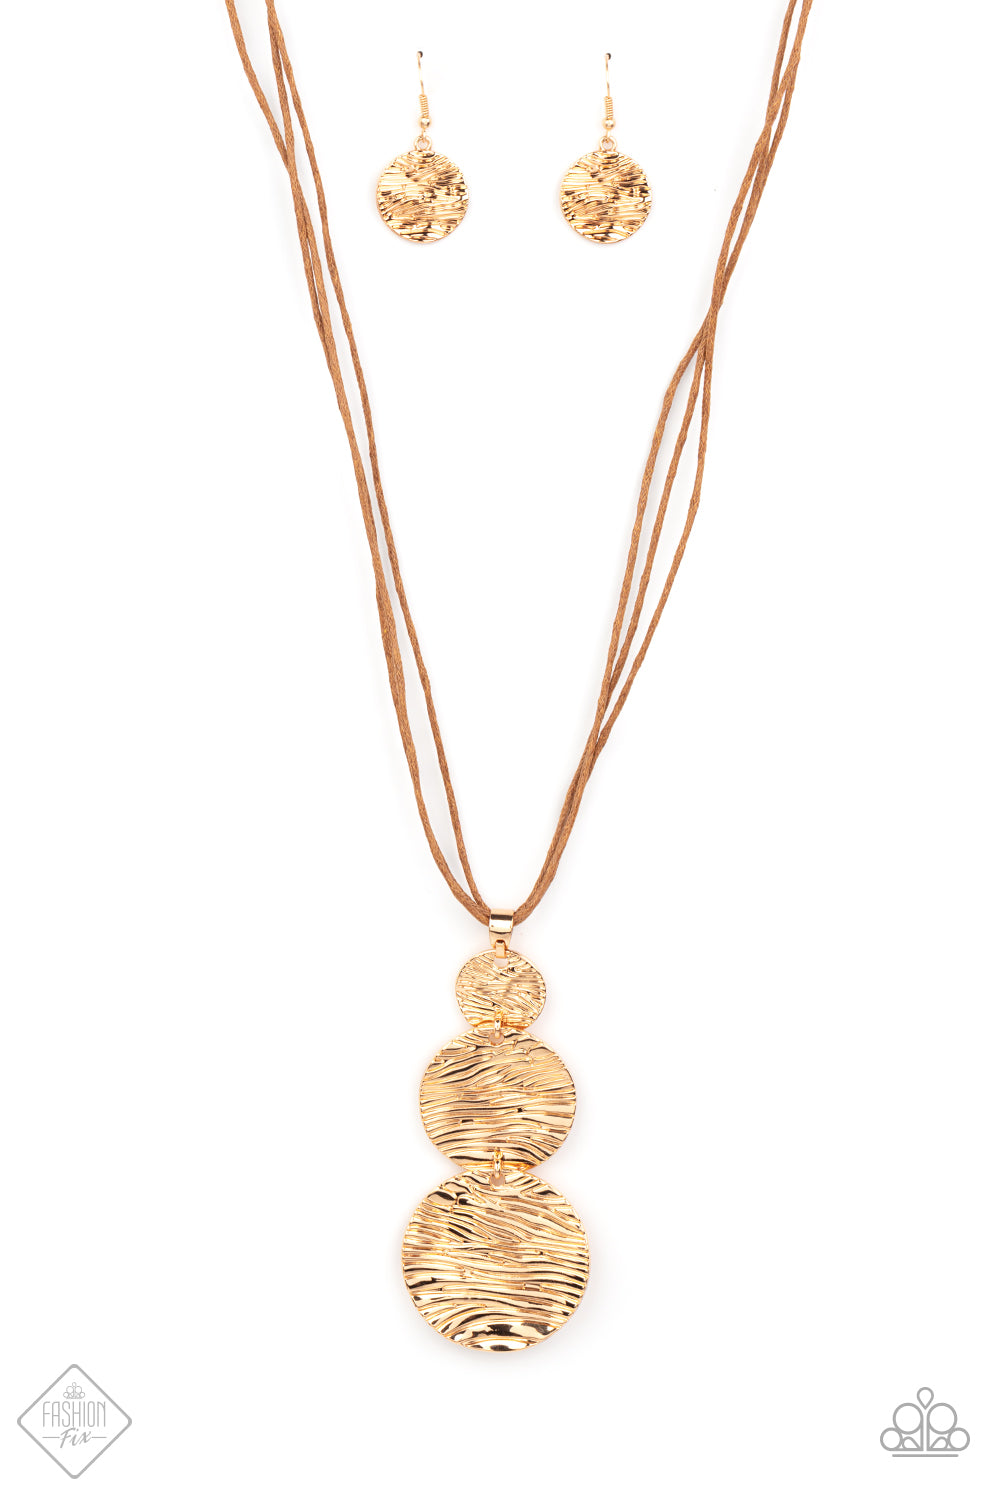 Circulating Shimmer - Gold Necklace (SS-0921) freeshipping - JewLz4u Gemstone Gallery